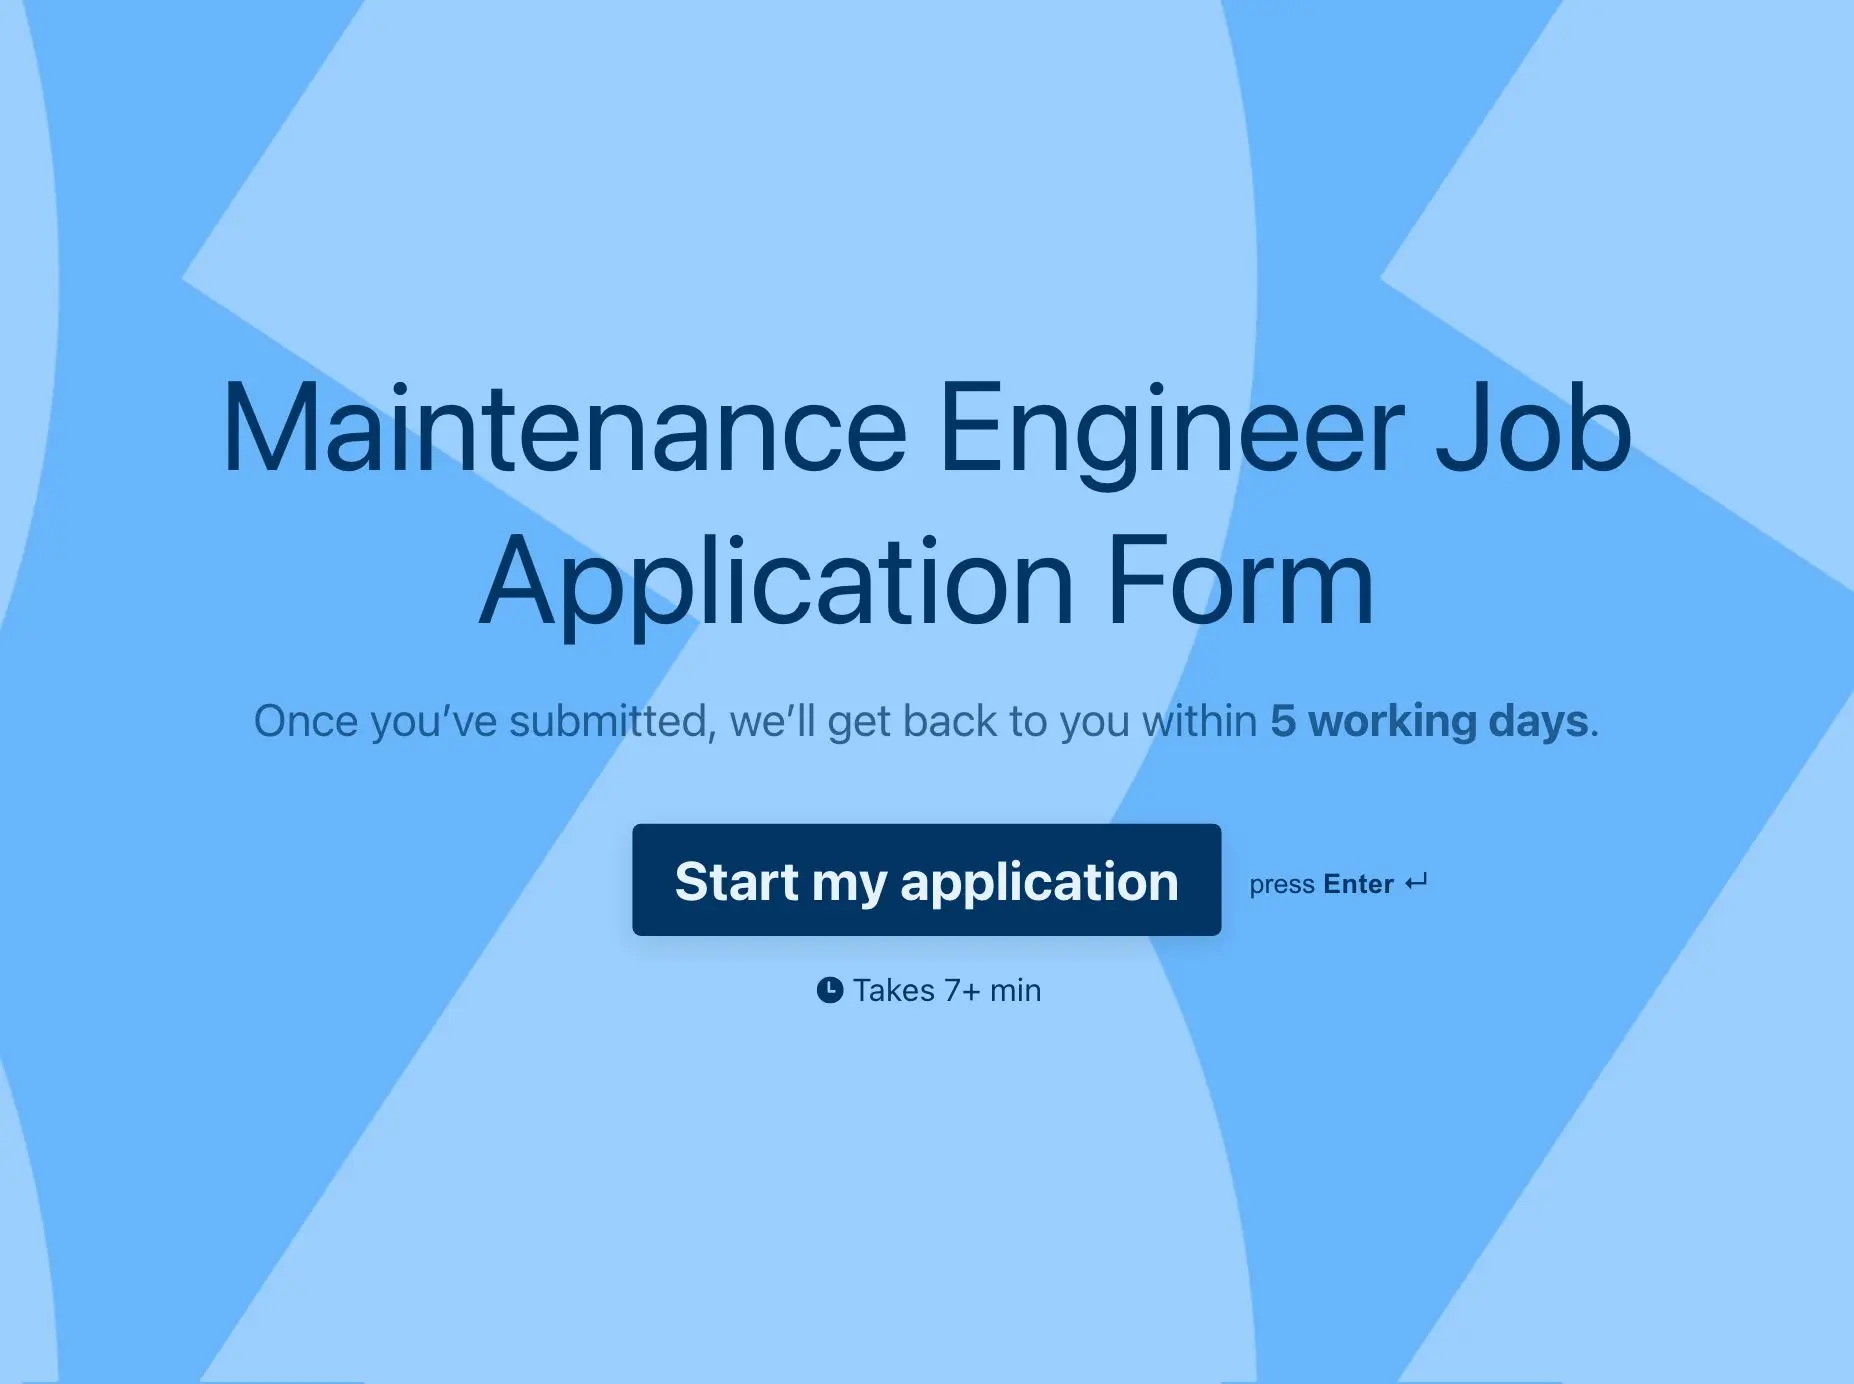 Maintenance Engineer Job Application Form Template Hero